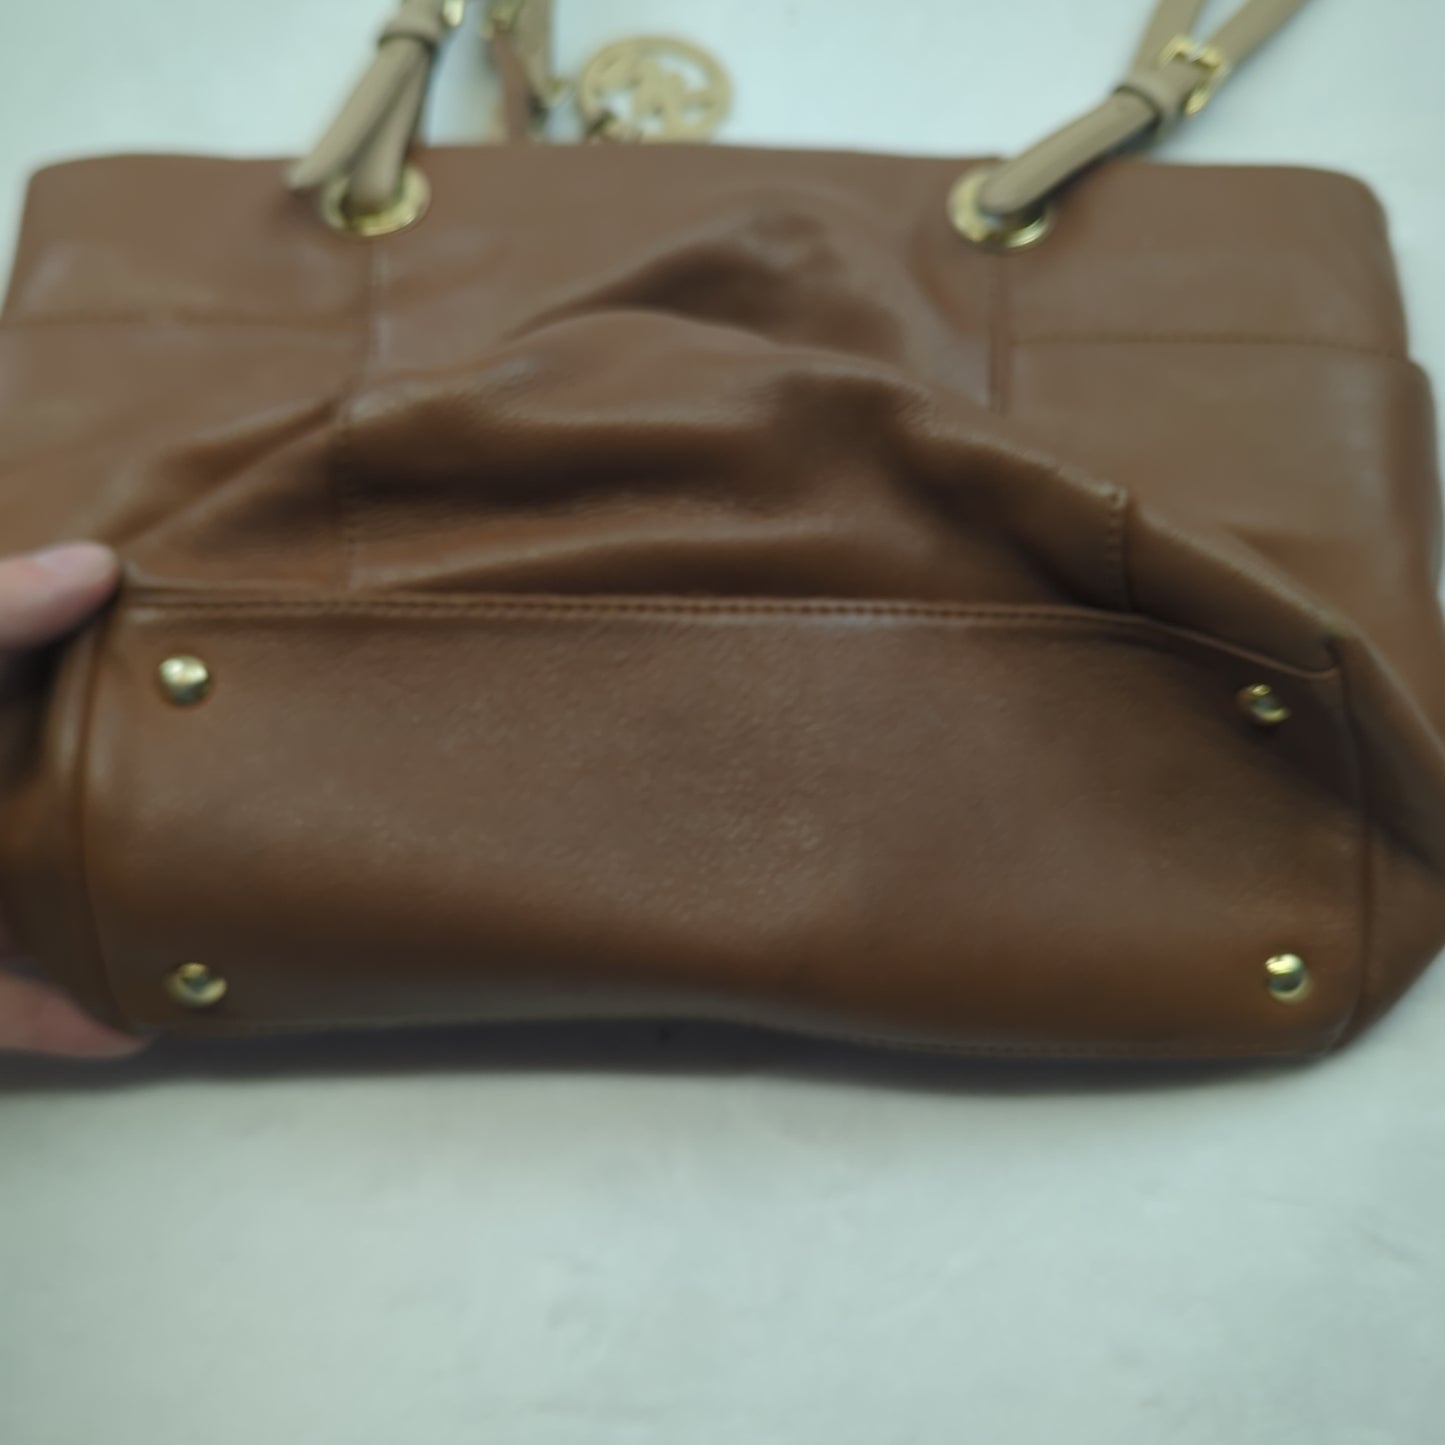 Michael Kors Brown Leather Shoulder Tote Bag Handbag Women